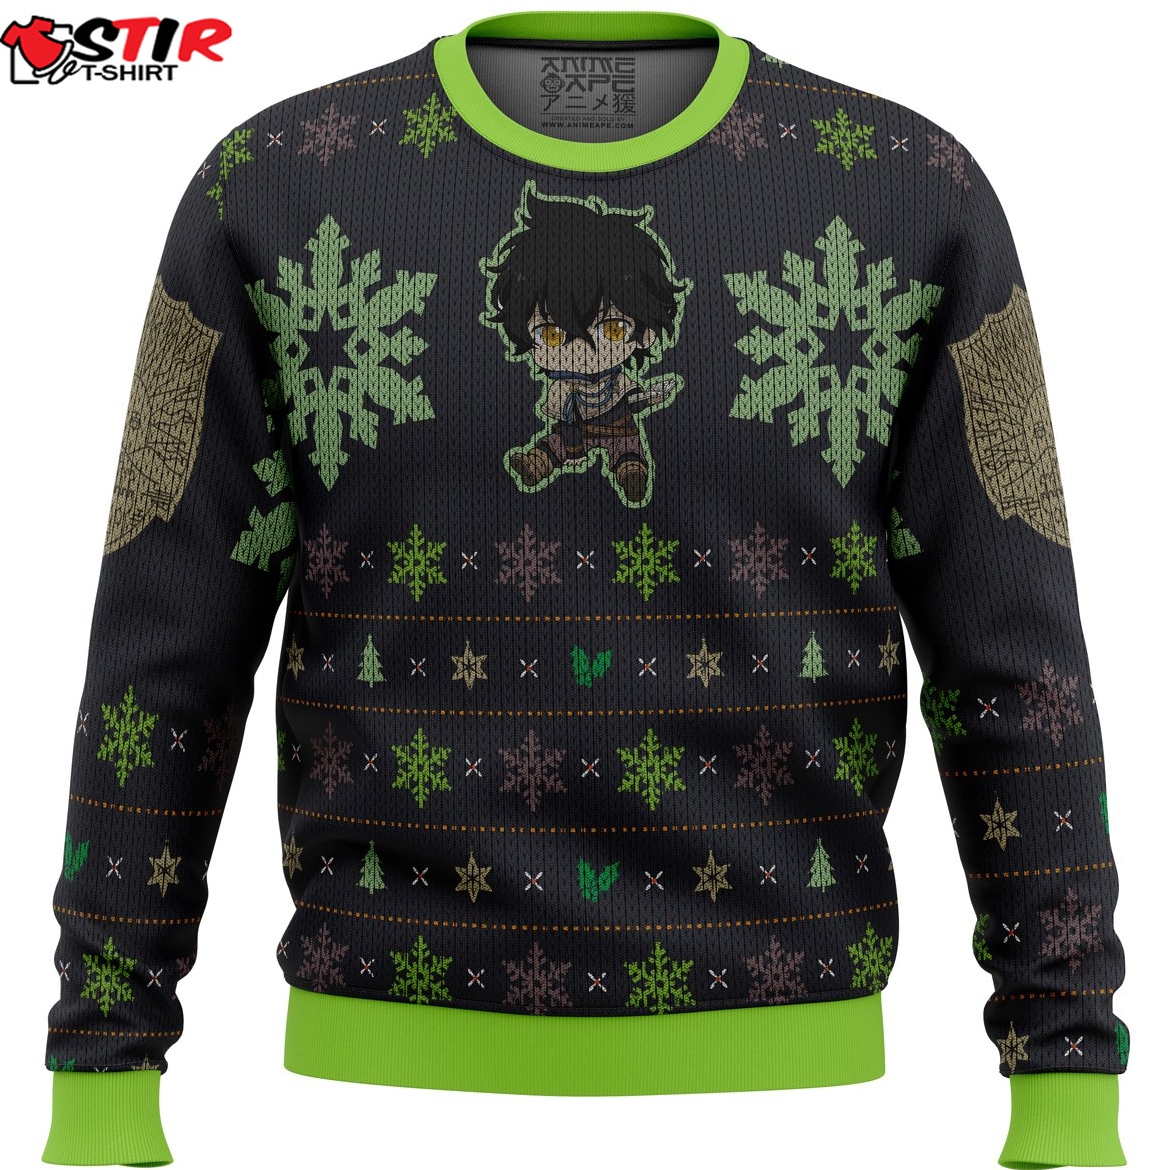 Yuno Black Clover Ugly Christmas Sweater Stirtshirt